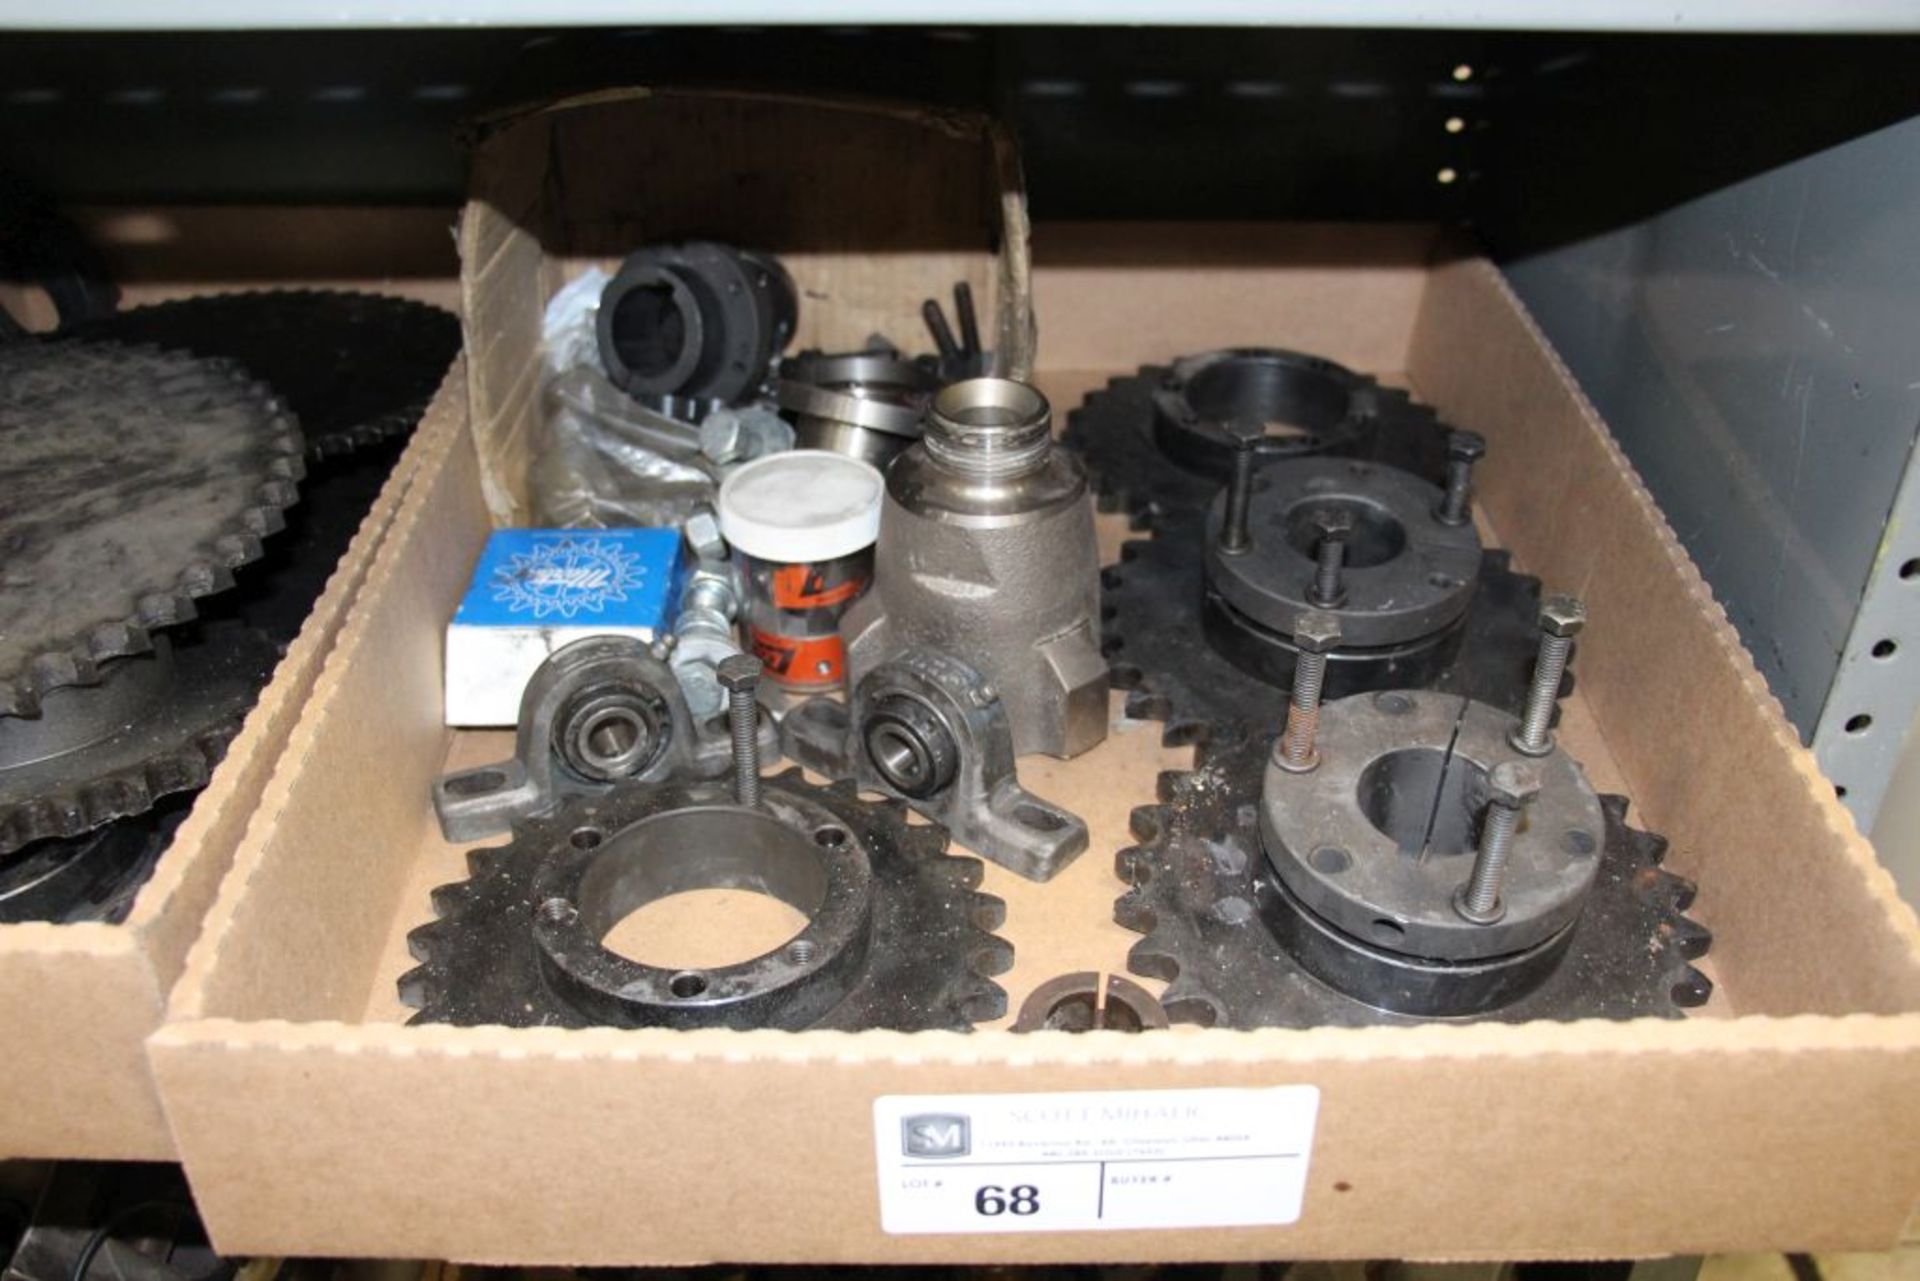 Misc. gears / bearings / fittings